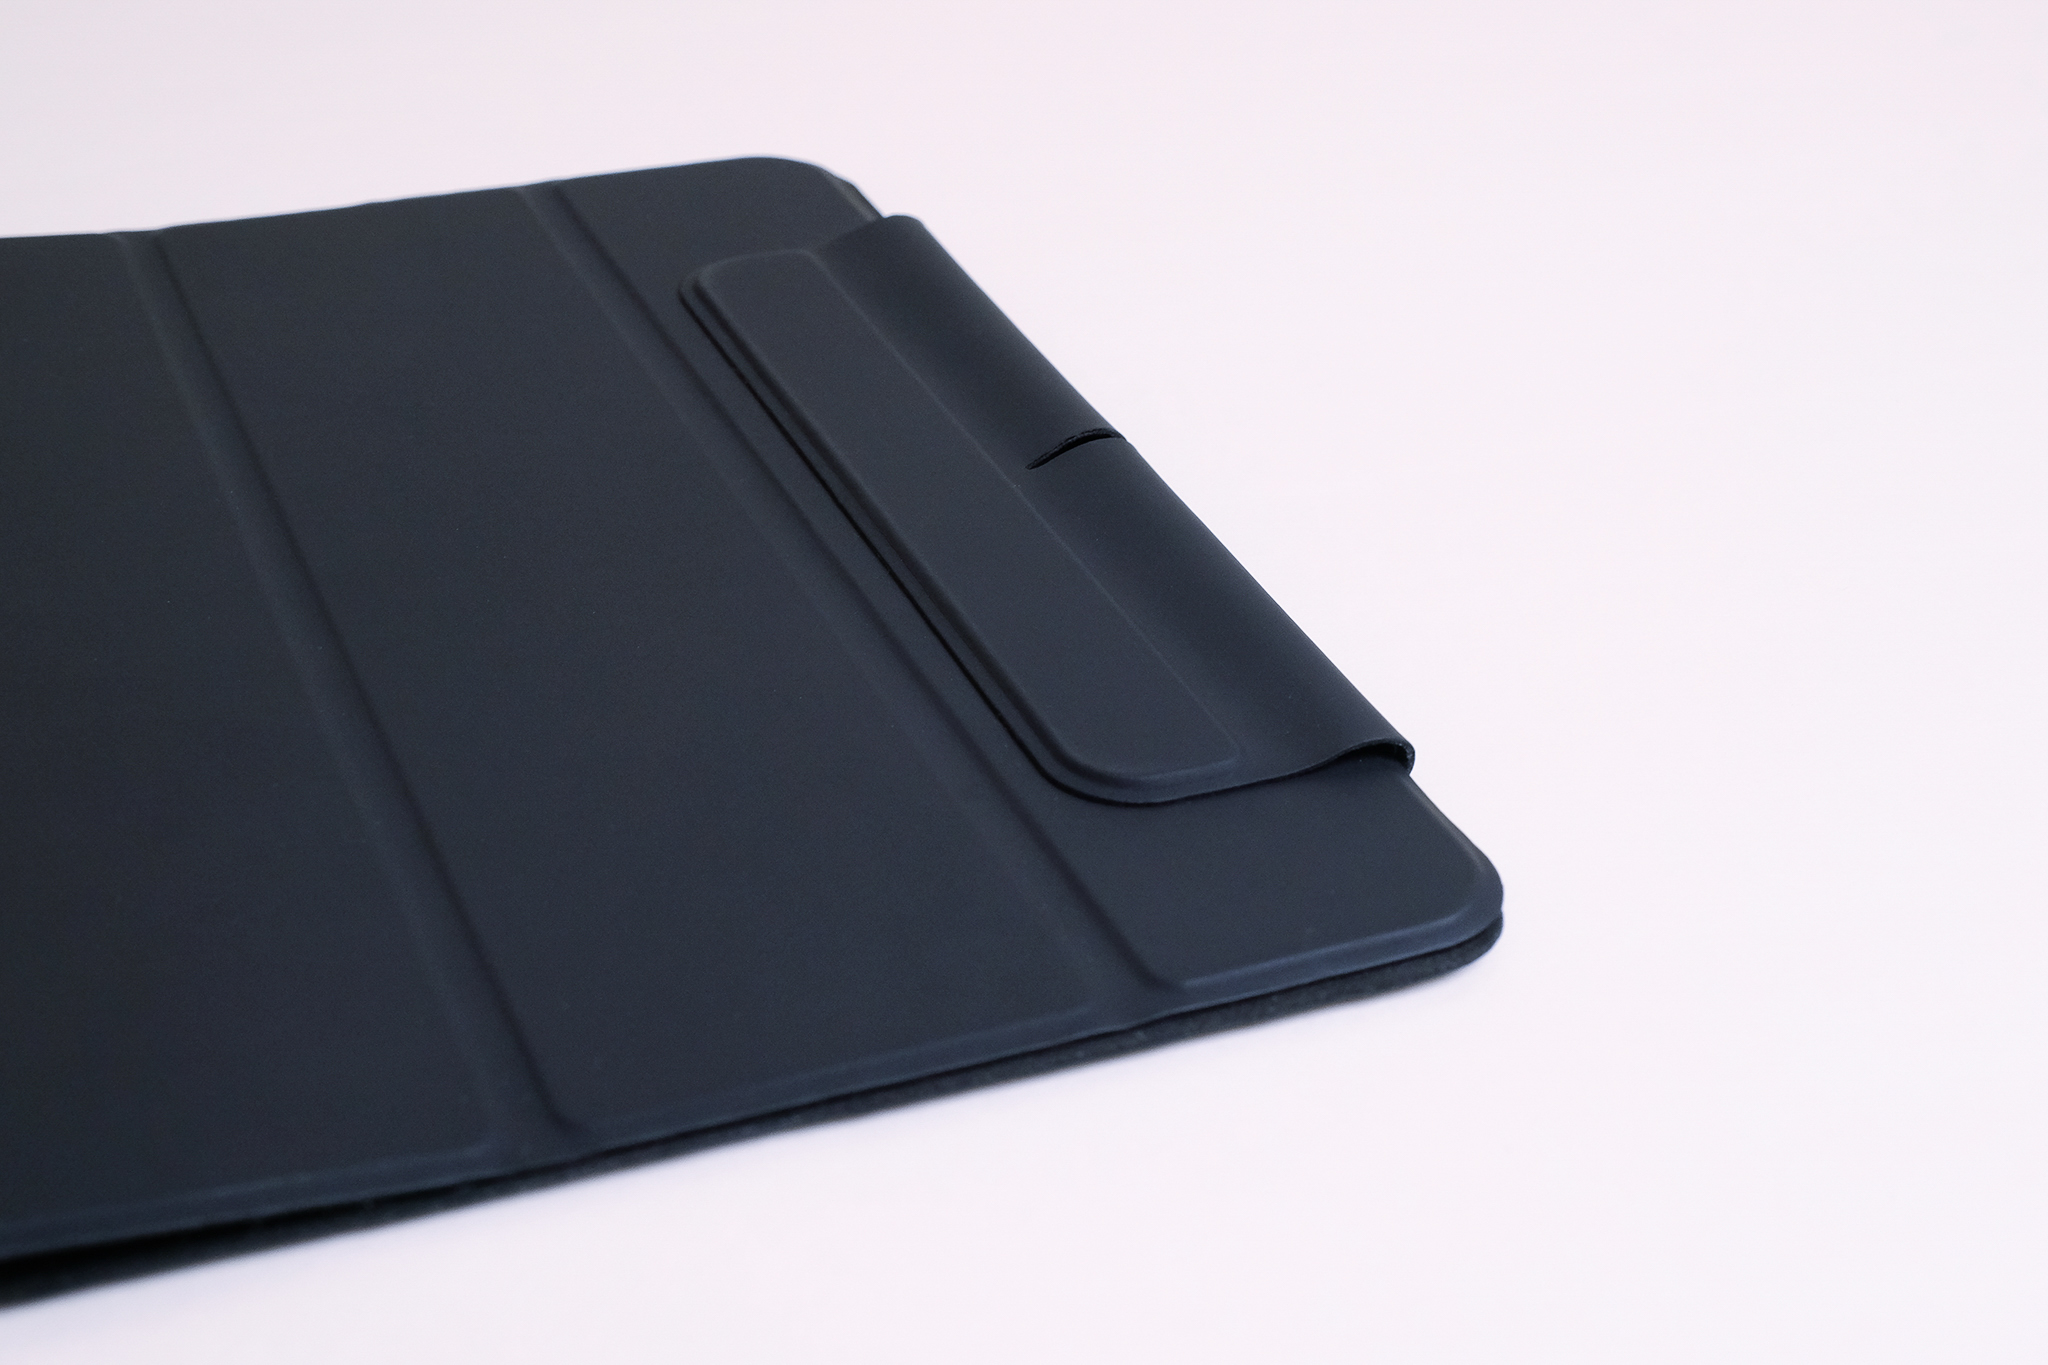 ESR iPad case レビュー！純正品以上と噂のiPadケースを5つの視点でチェック